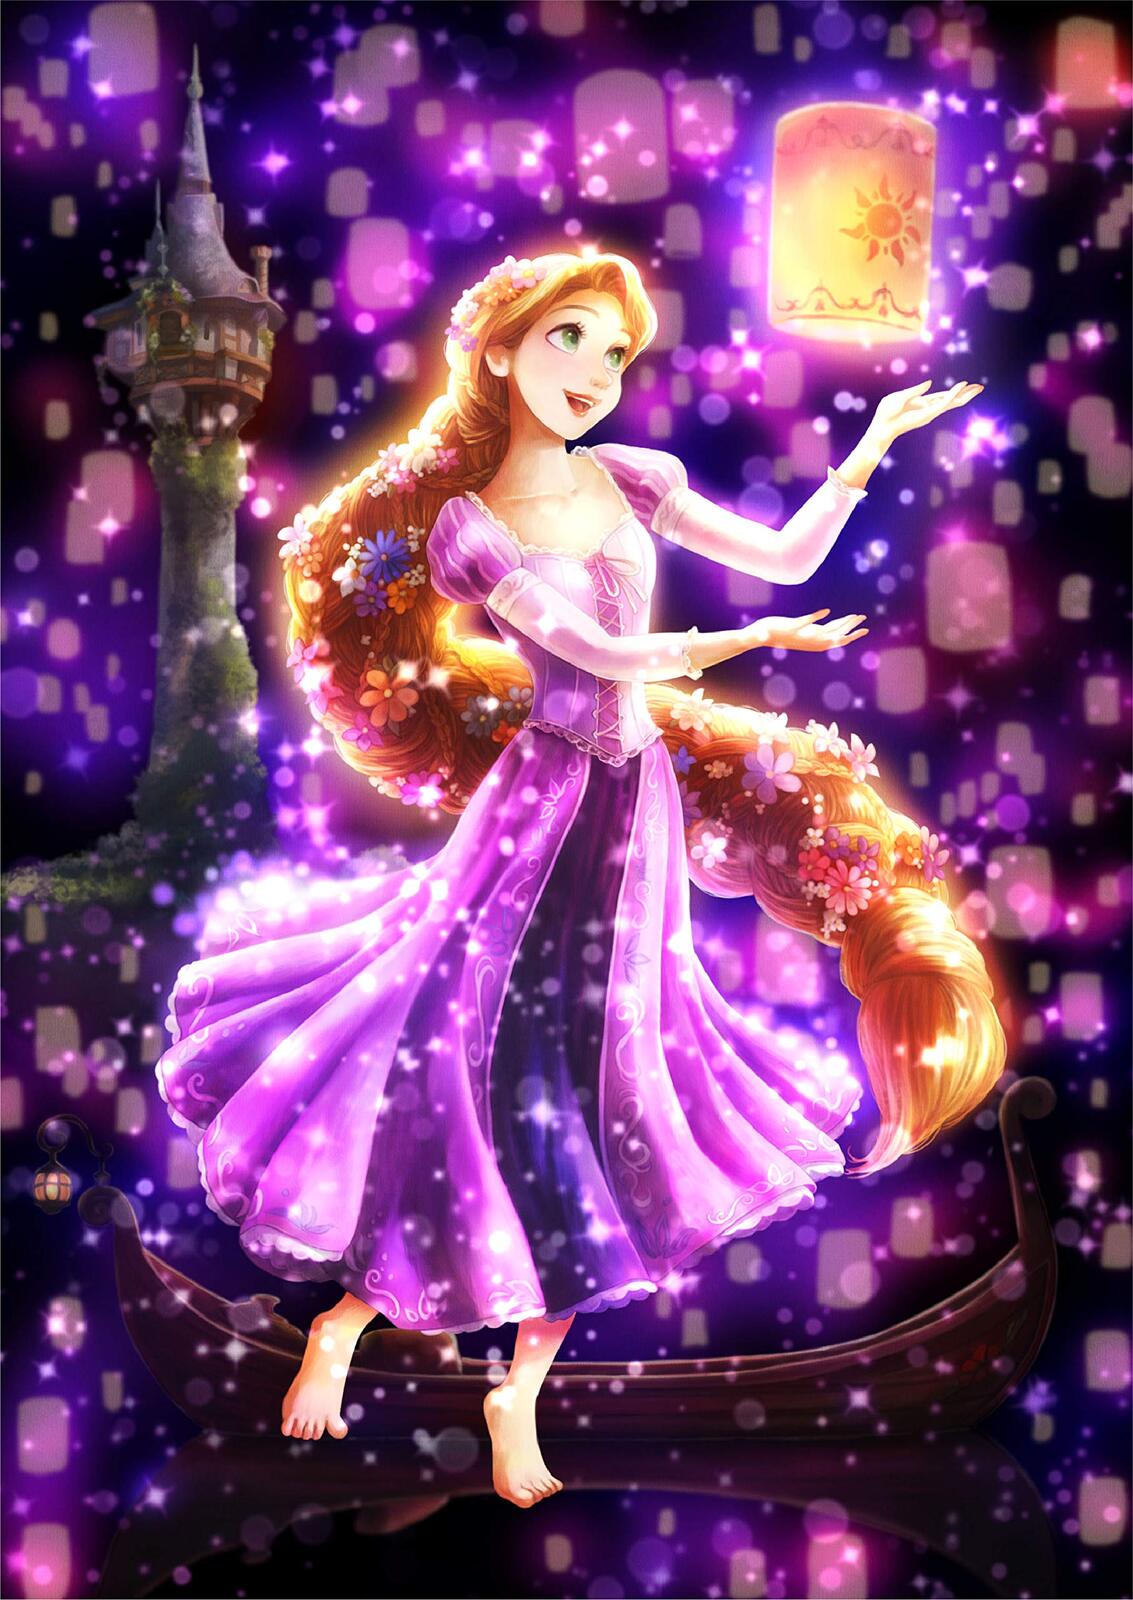 Rapunzel Bright Dream in the Night Sky Puzzle 266 pieces - Tenyo Puzzle Disney